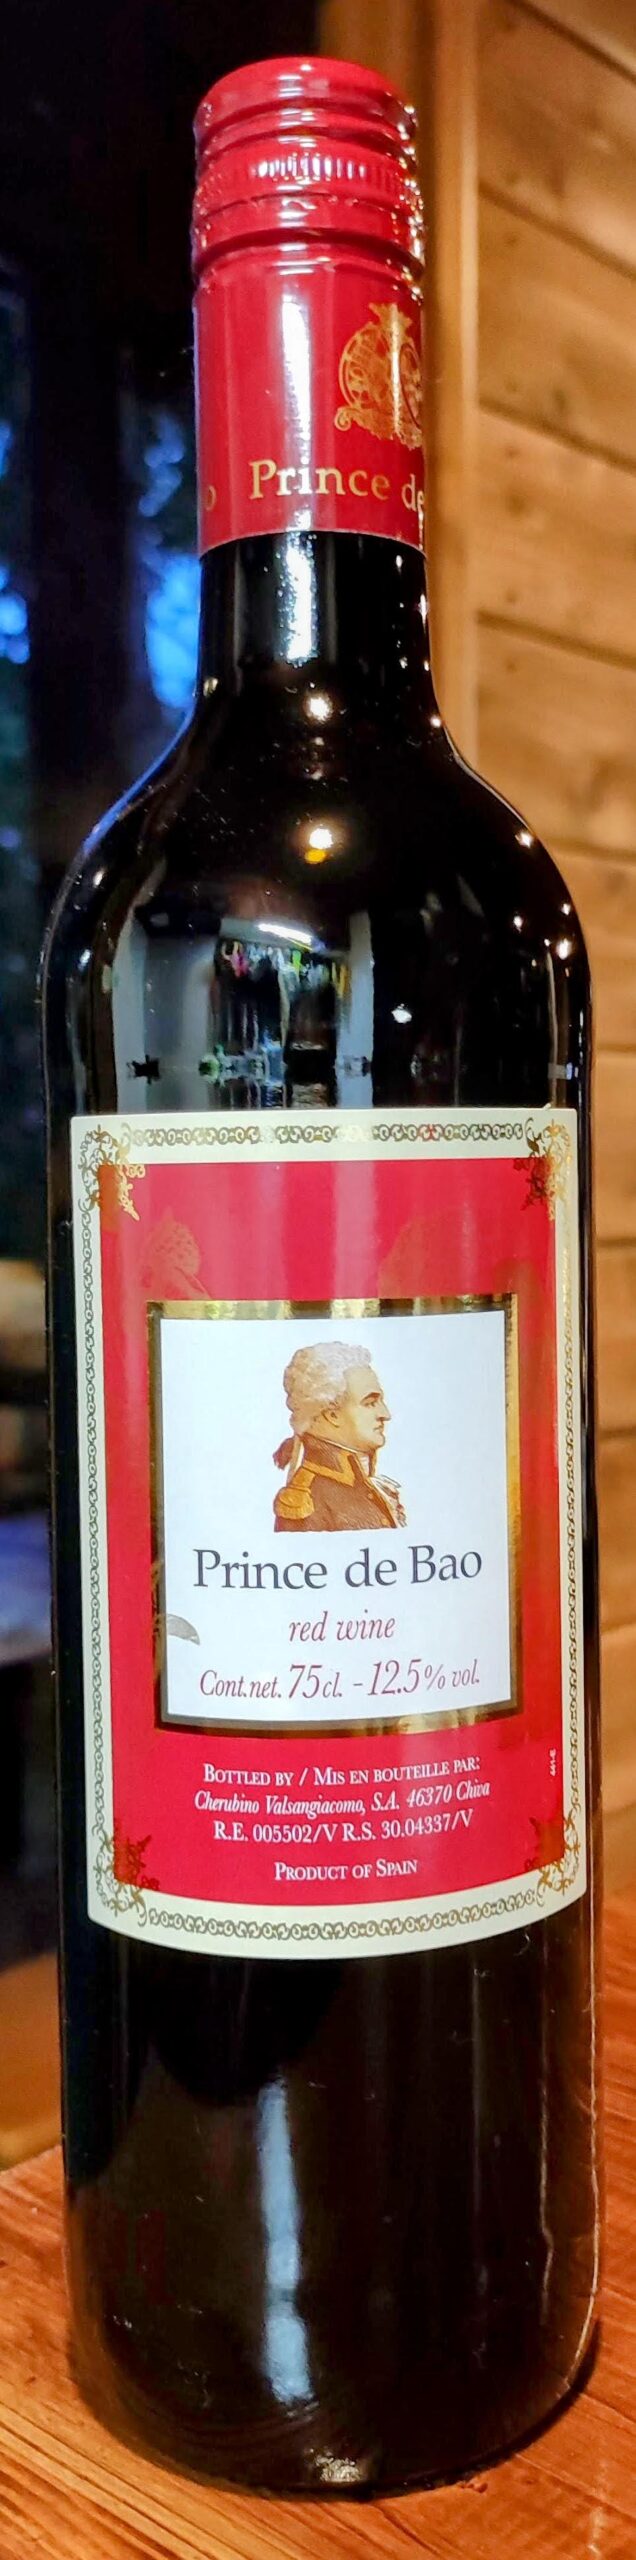 Prince de Bao Tinto : プリンス デ バオ 赤